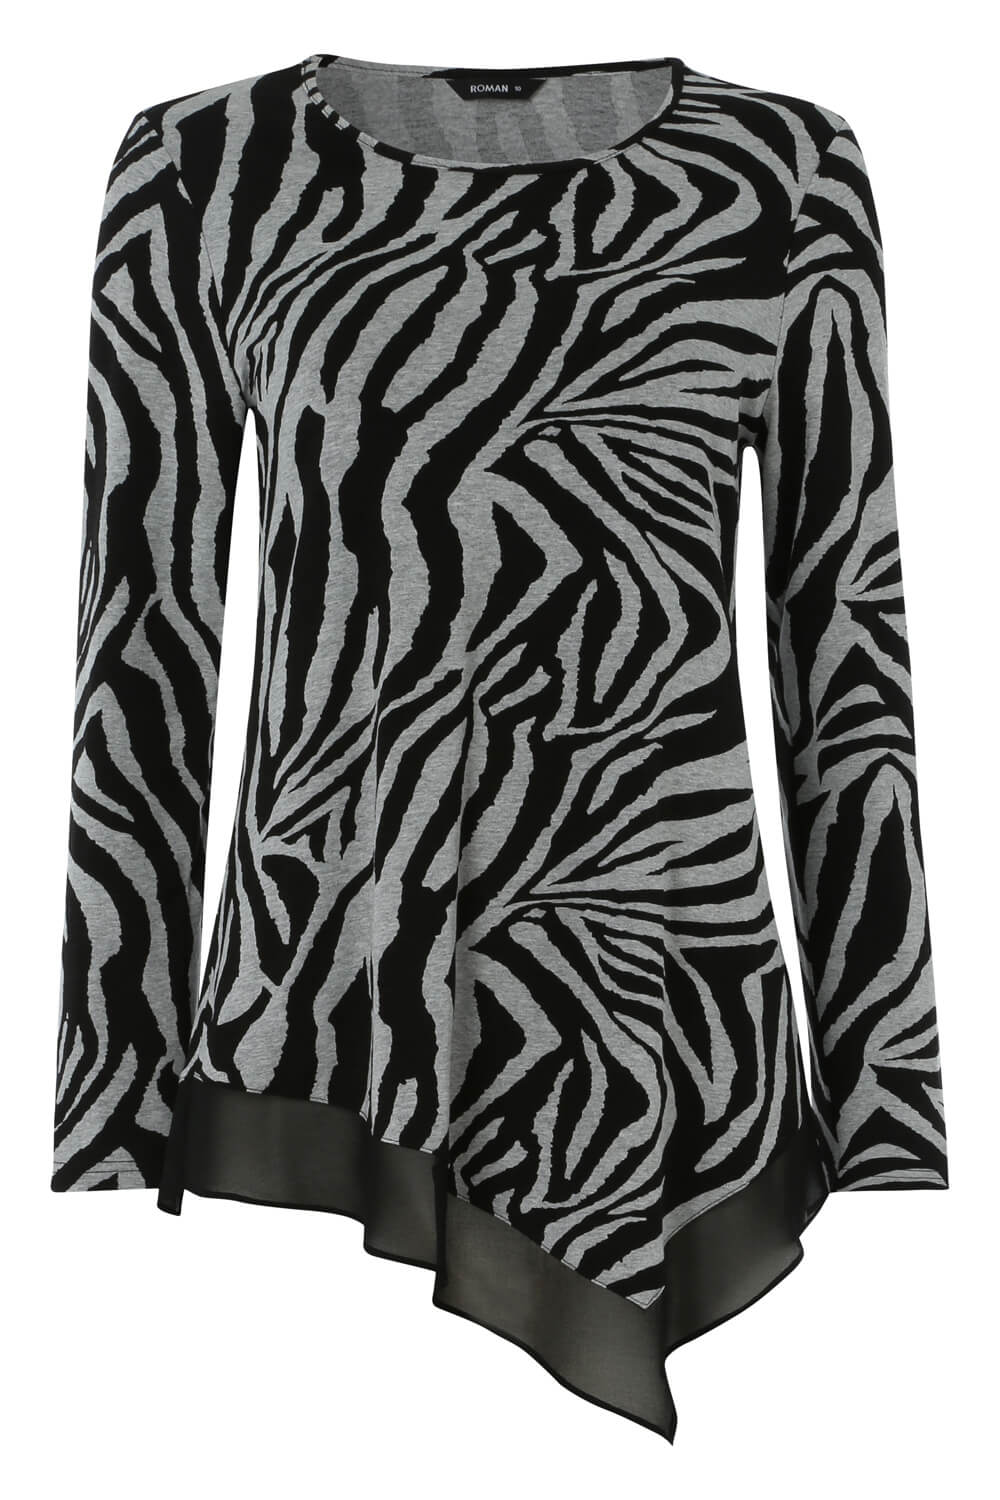 Grey Zebra Print Chiffon Hem Top, Image 4 of 8